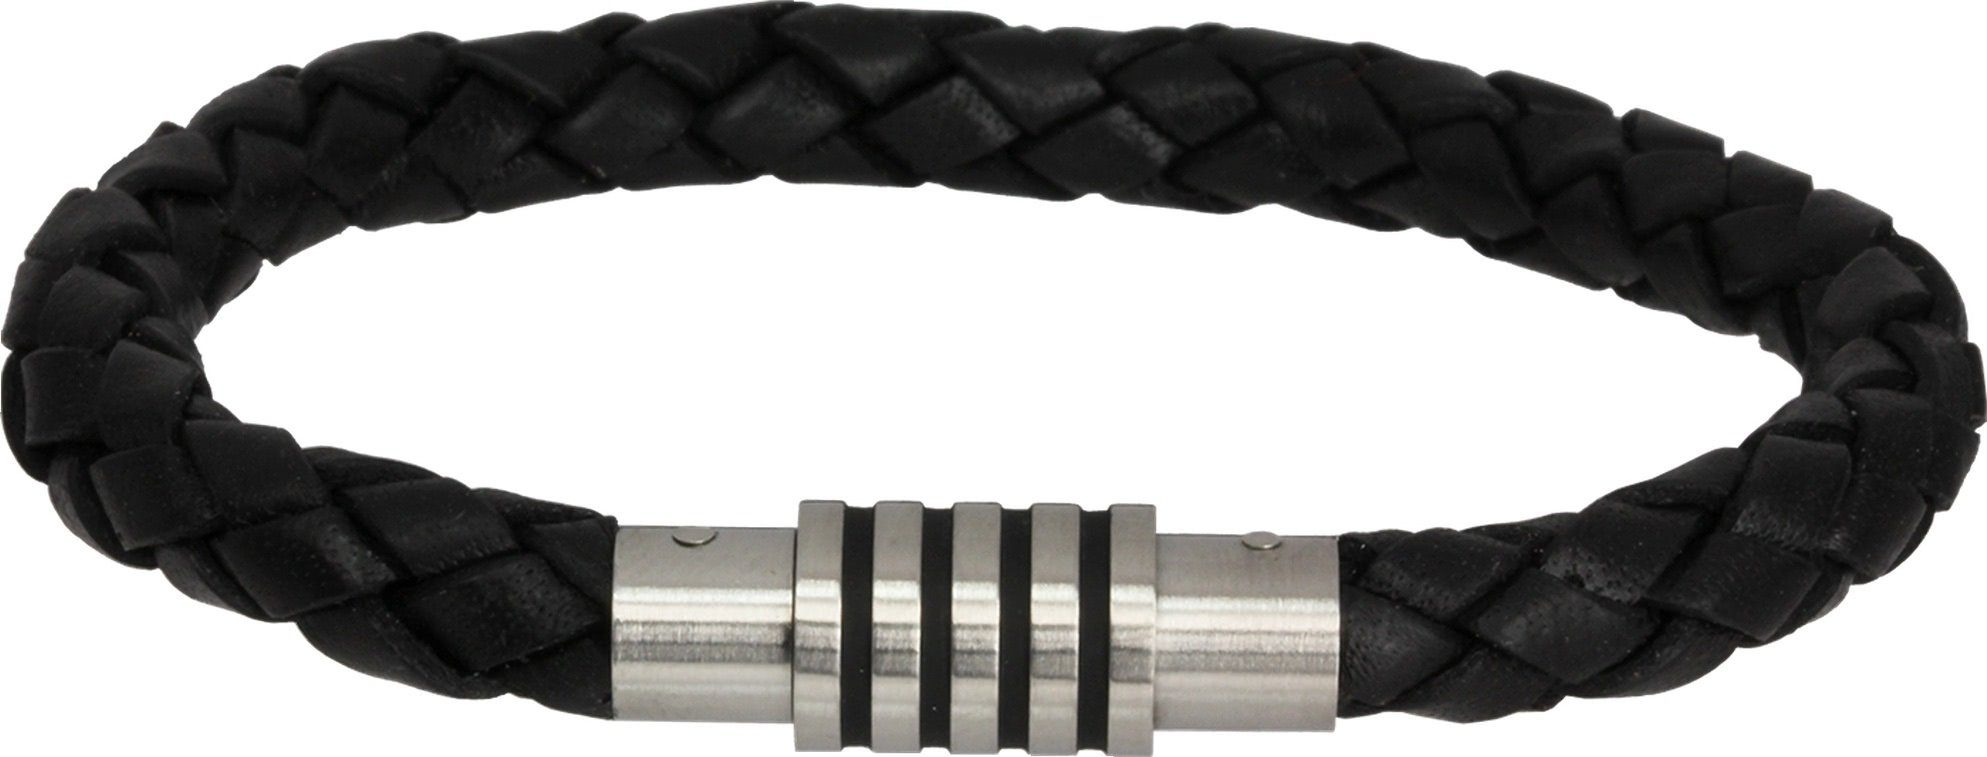 Armband Herren (Stainless Farbe: (Armband), Edelstahl schwarz Steel), Herren Armband Amello ca. 19cm, schwarz Edelstahlarmband Armschmuck Amello